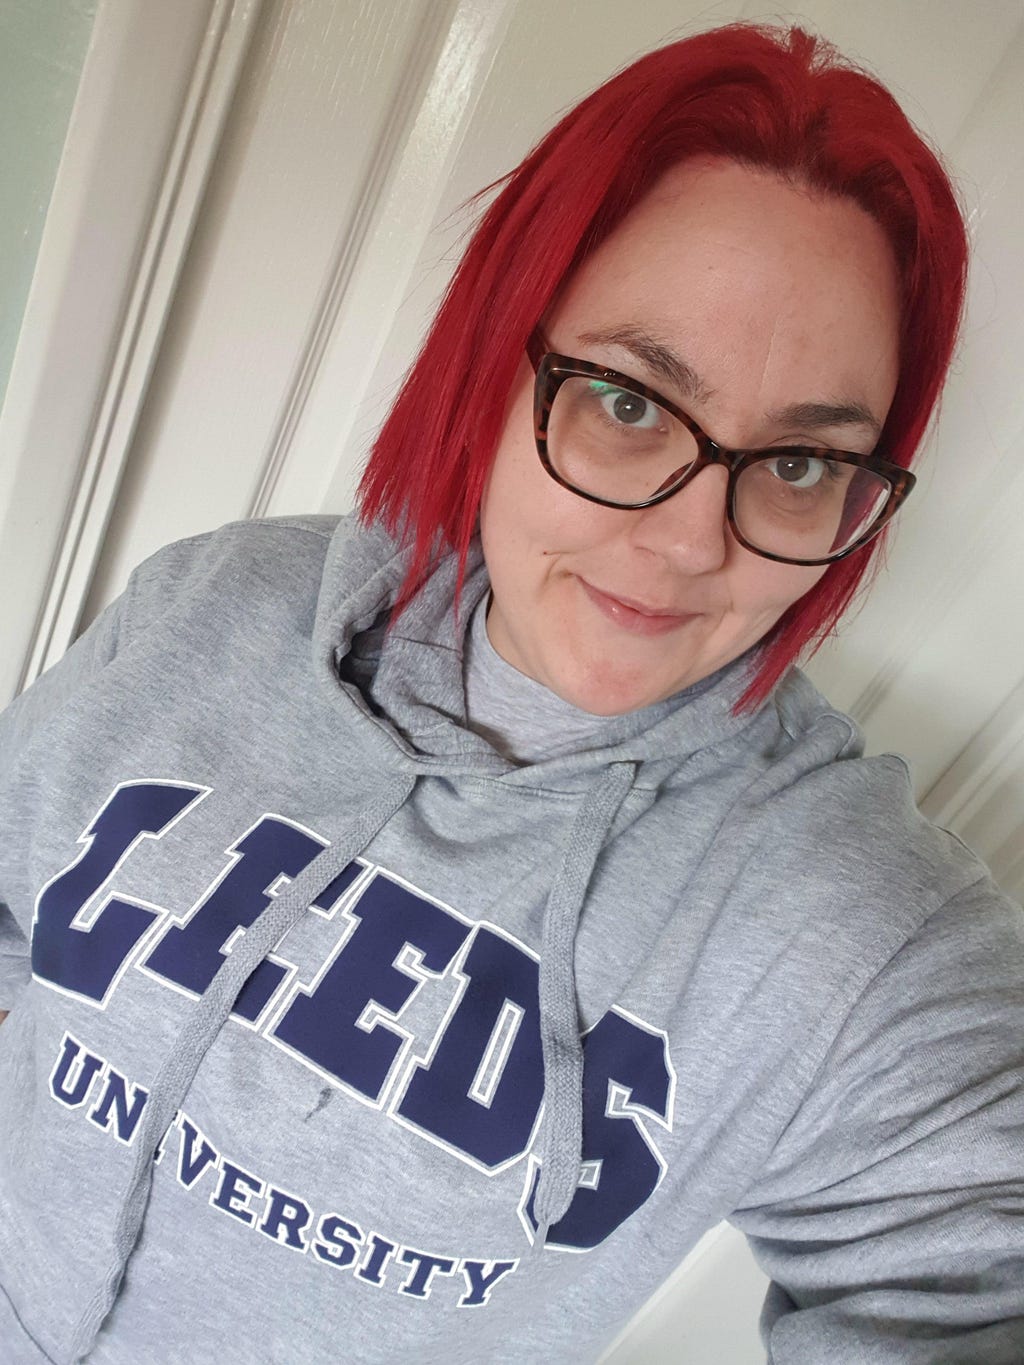 A ‘selfie’ image of Emily wearing a University of Leeds branded sweatshirt.